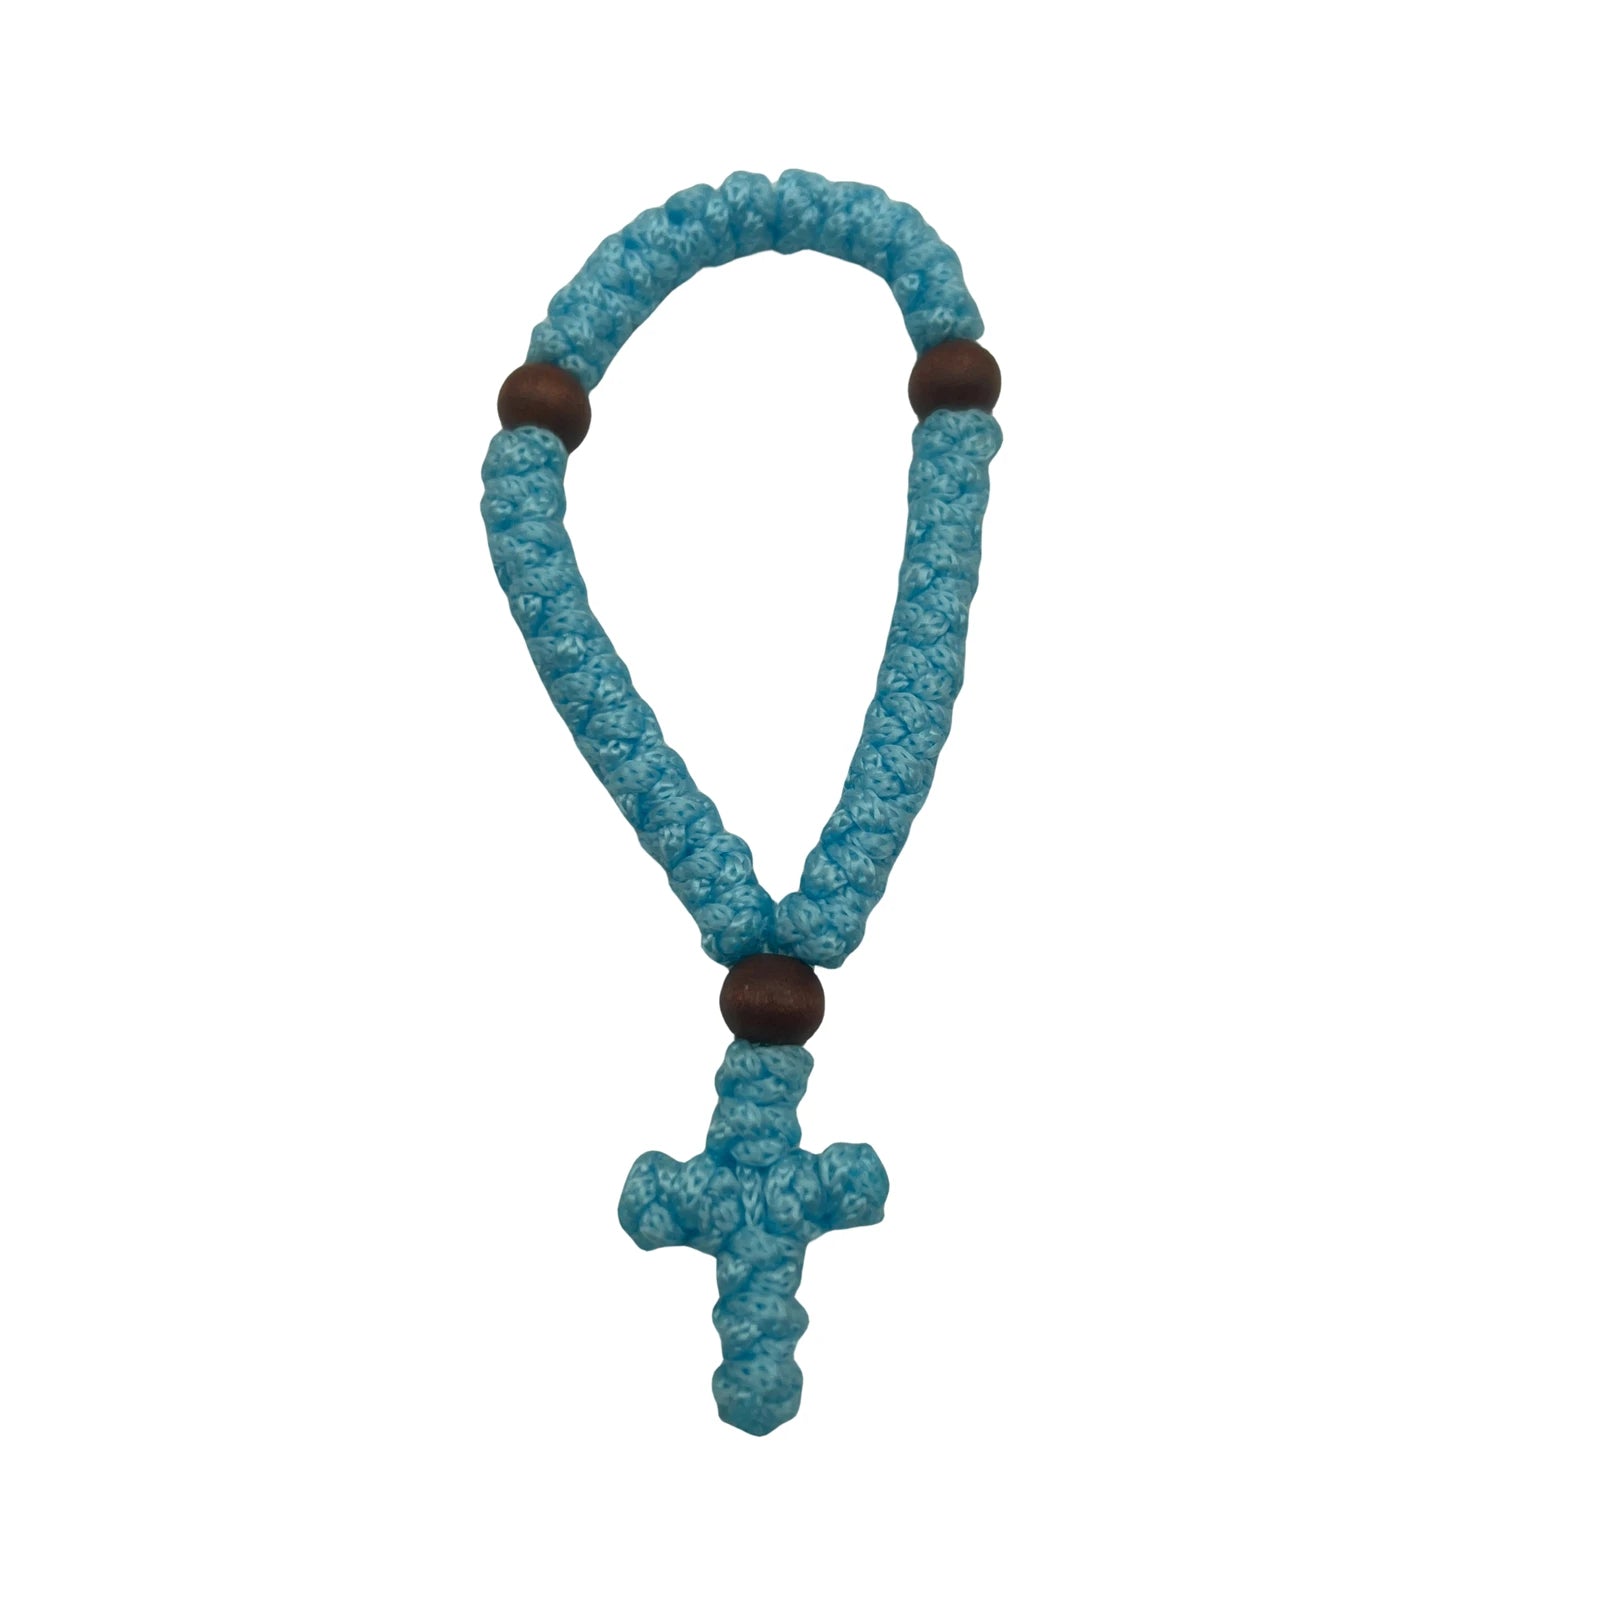 1Pc Handmade Christian 33 knot Orthodox Greek Omboskoini Prayer Rope Protection Blessing Cross Charm Tassel Car Hanging Charm Turquoise